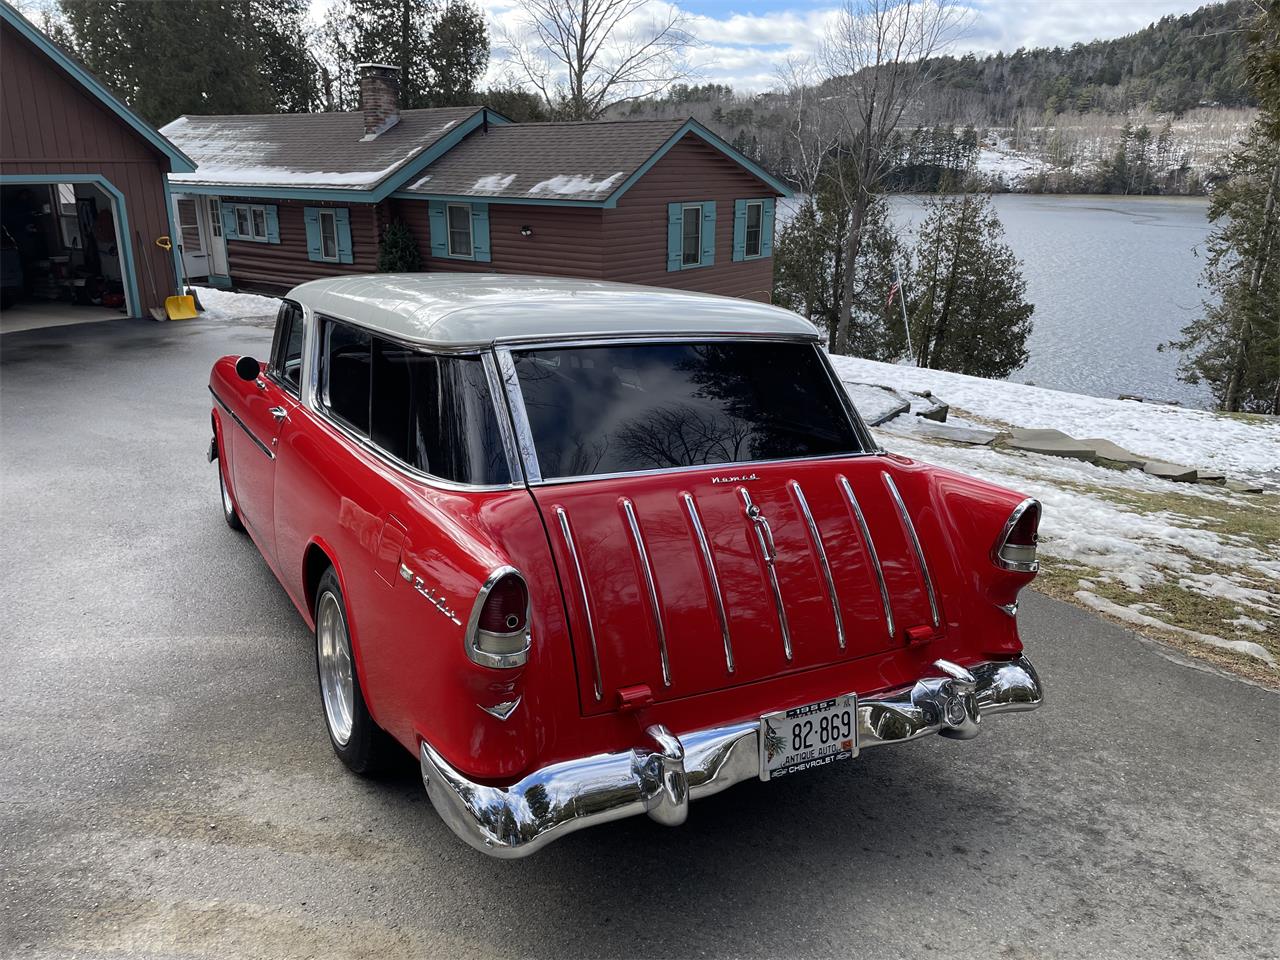 1955 Chevrolet Nomad in Verona Island, Maine